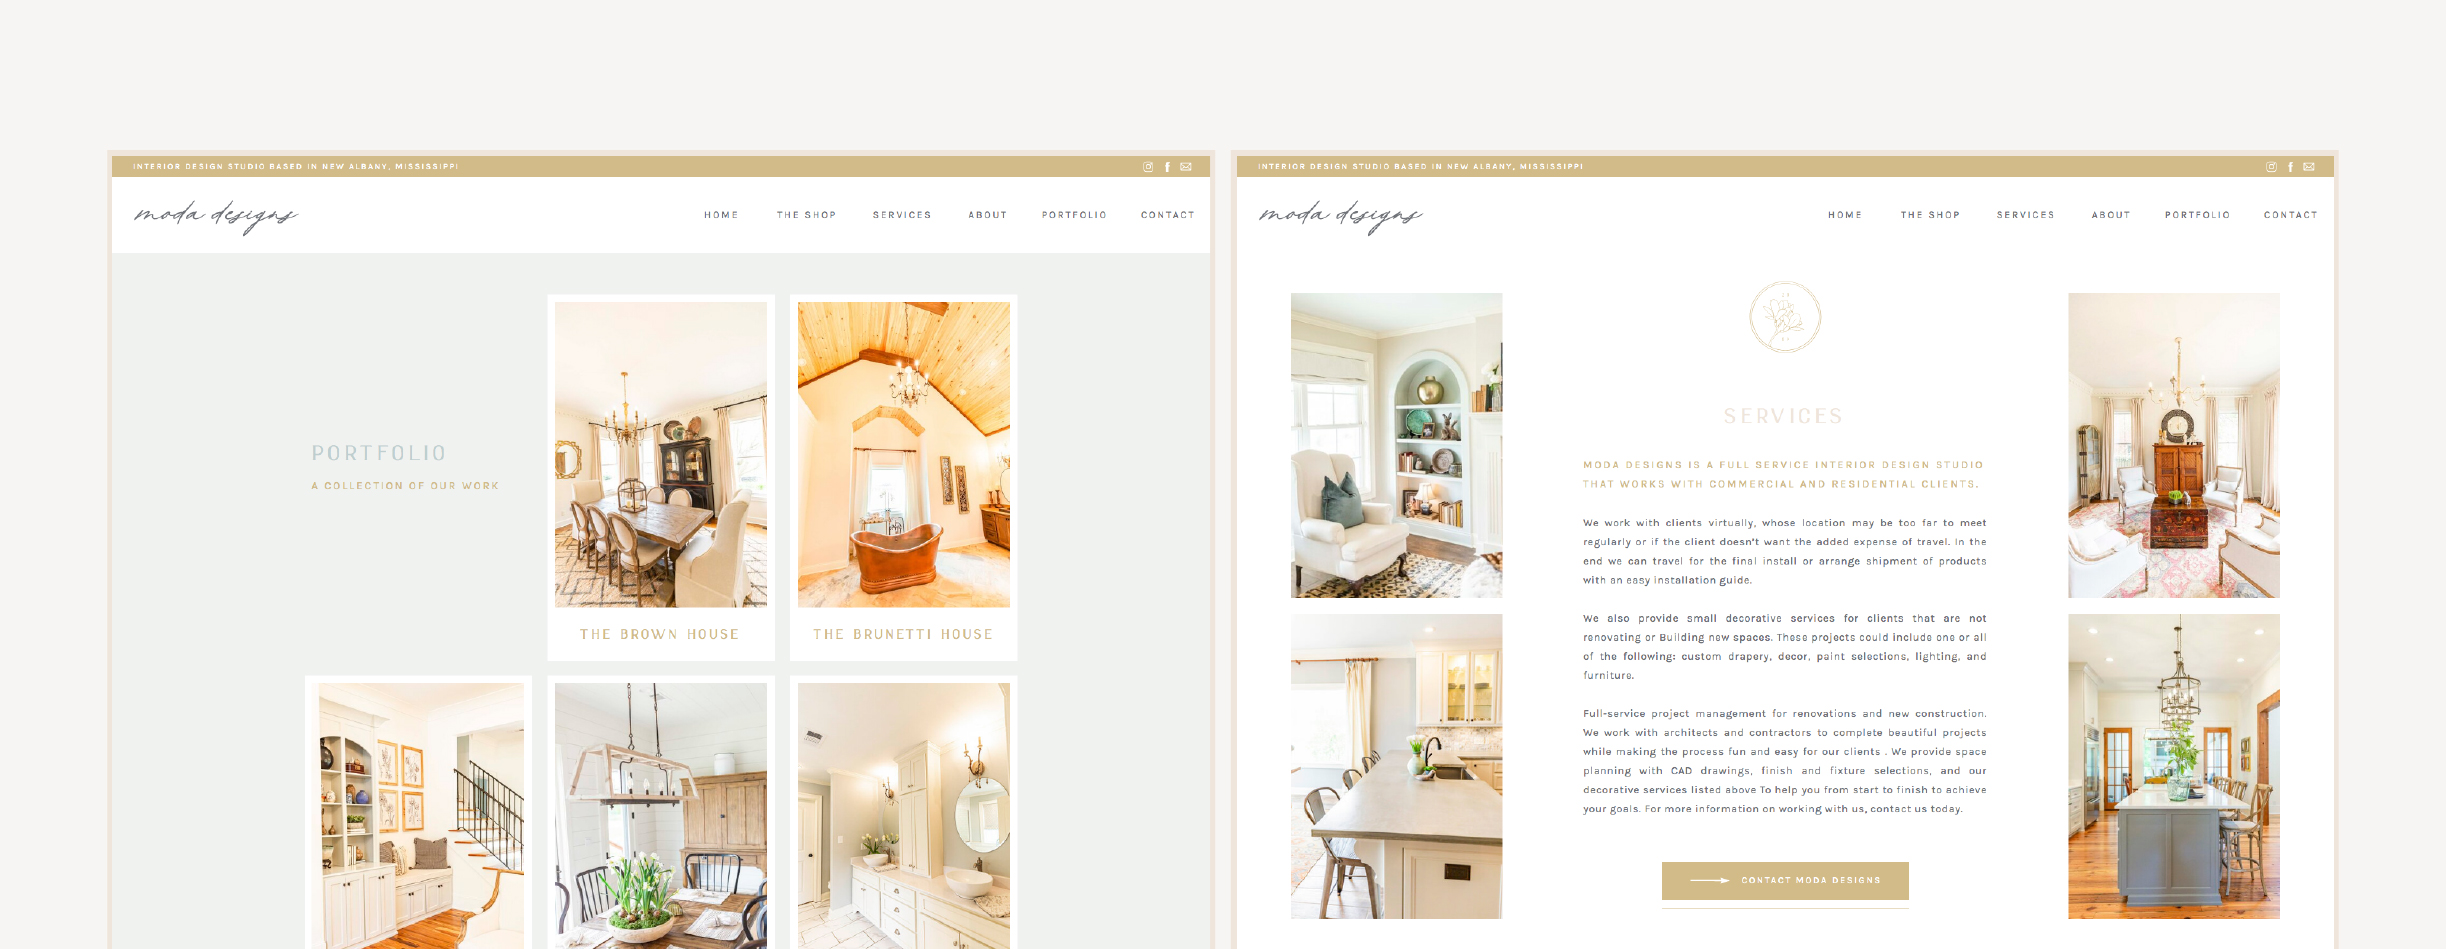 interior designer website design pages for Moda Designs